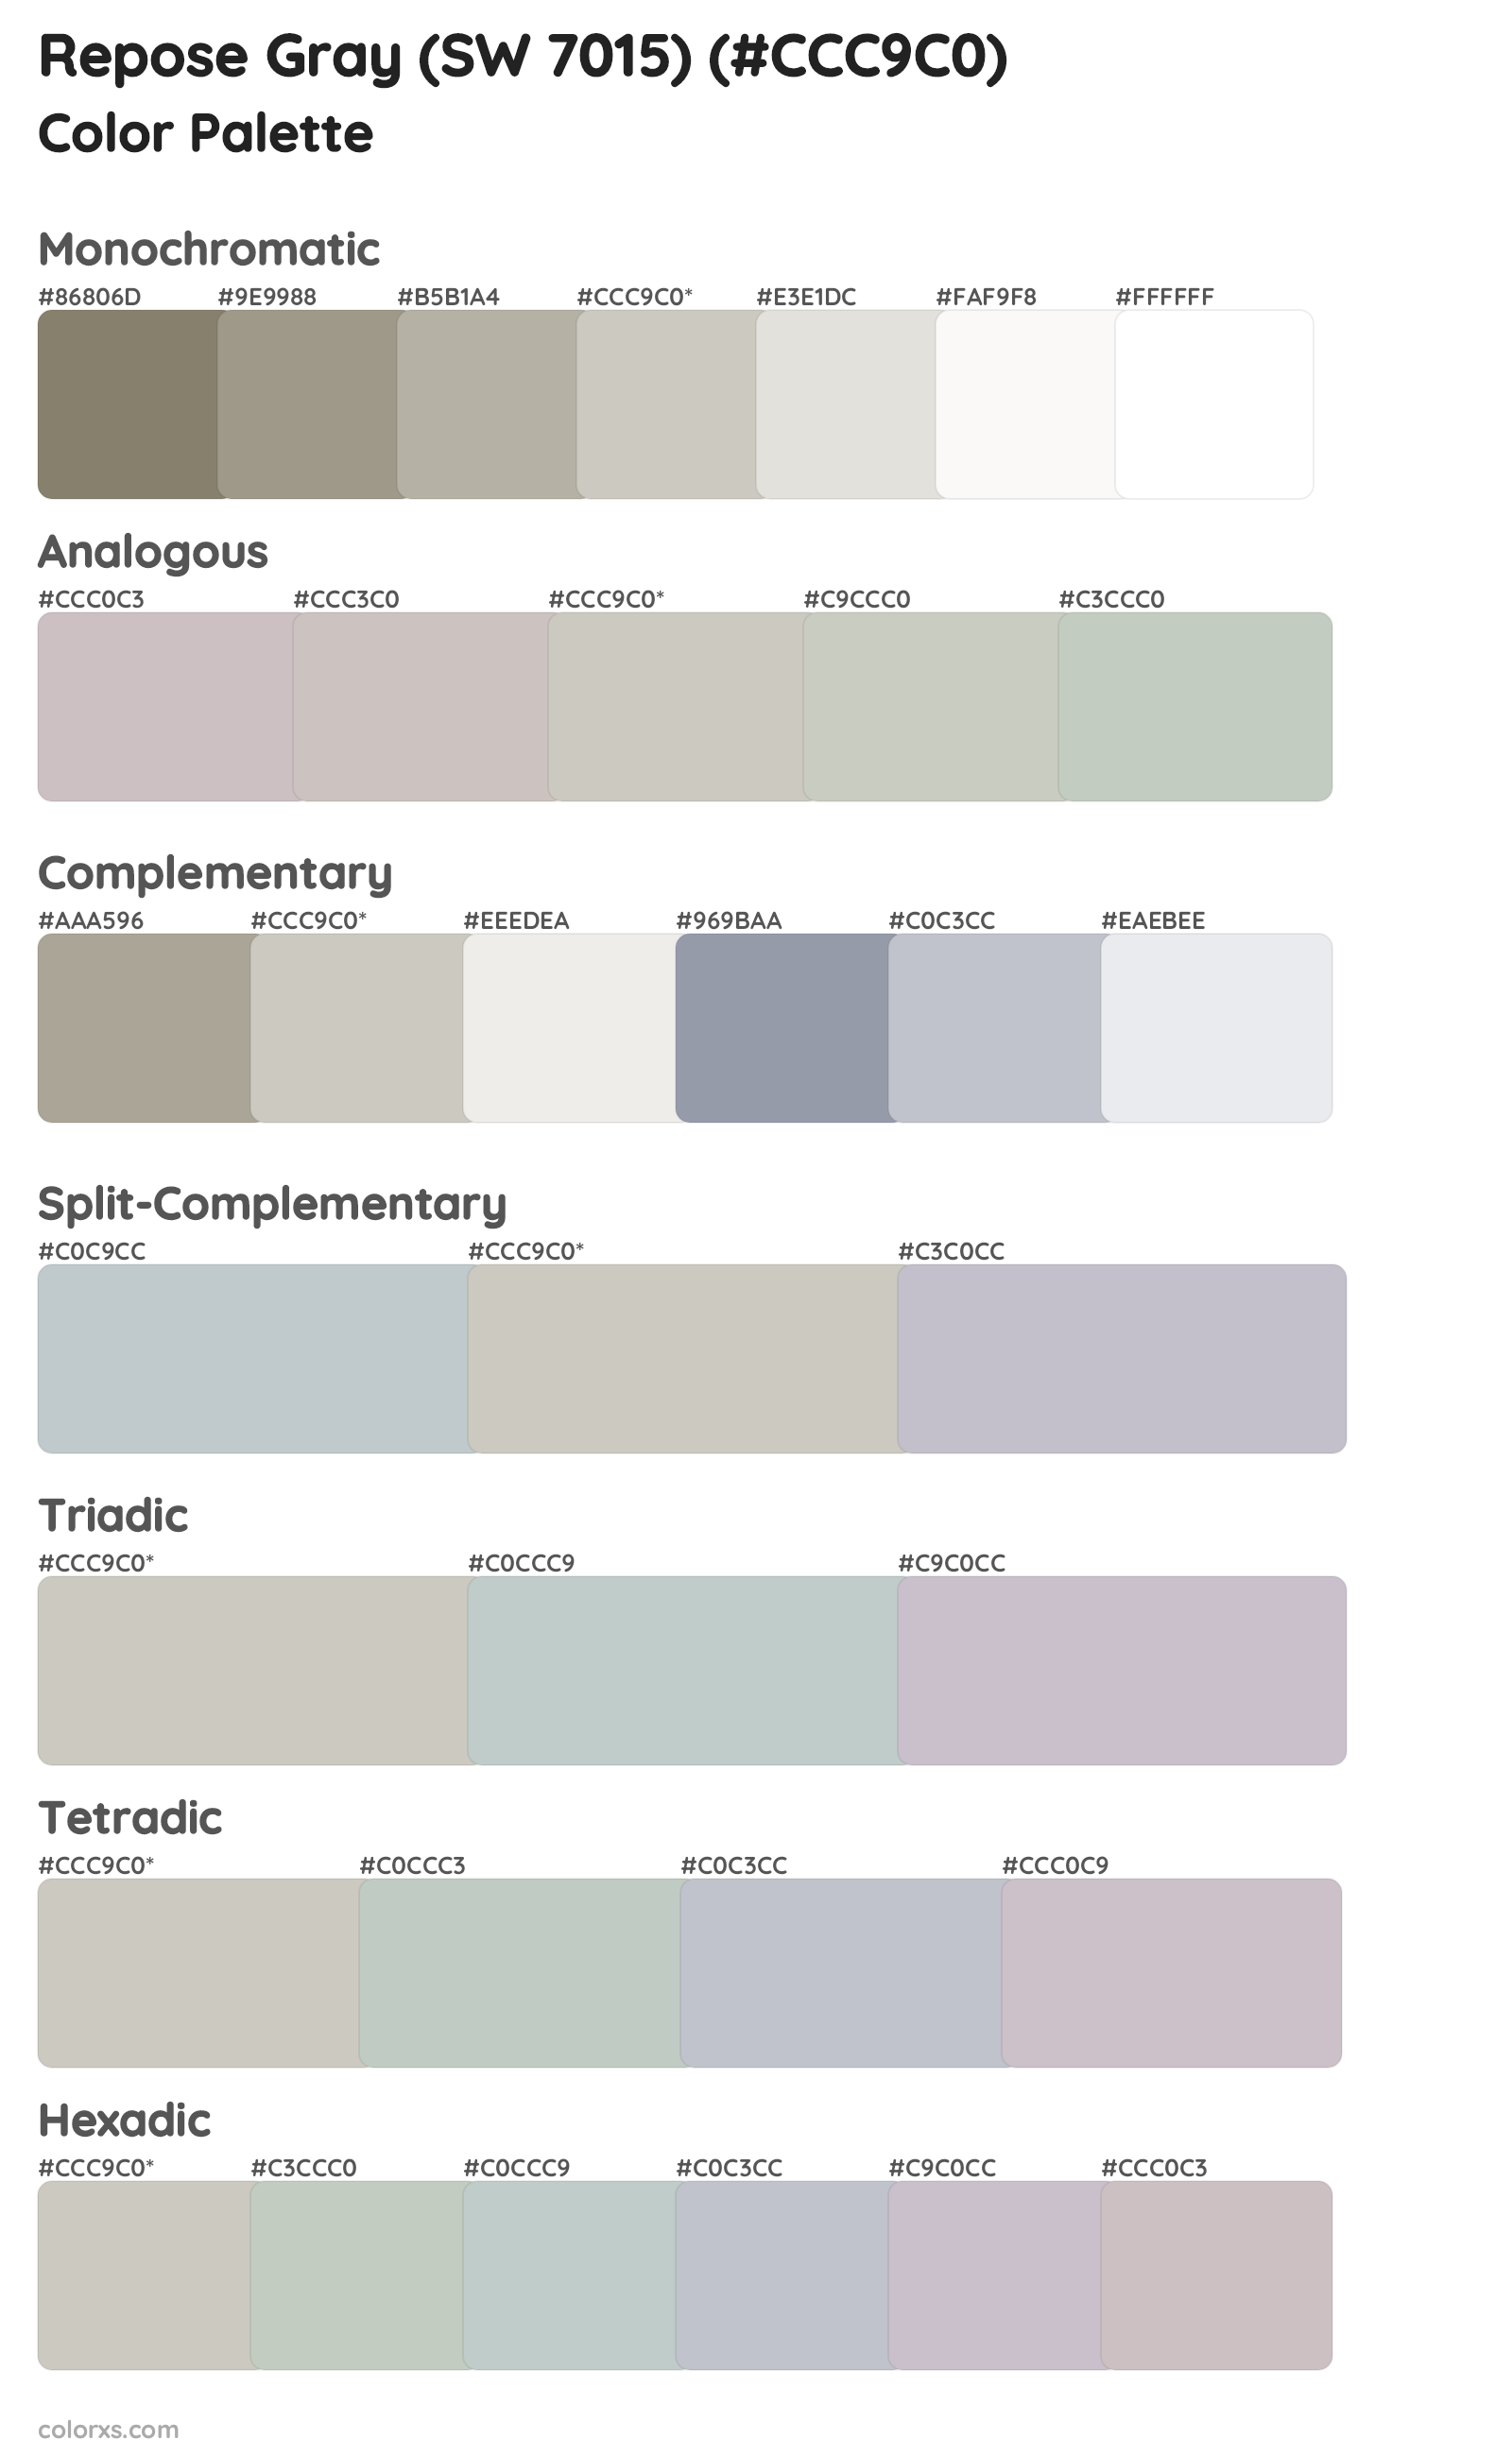 Repose Gray (SW 7015) Color Scheme Palettes